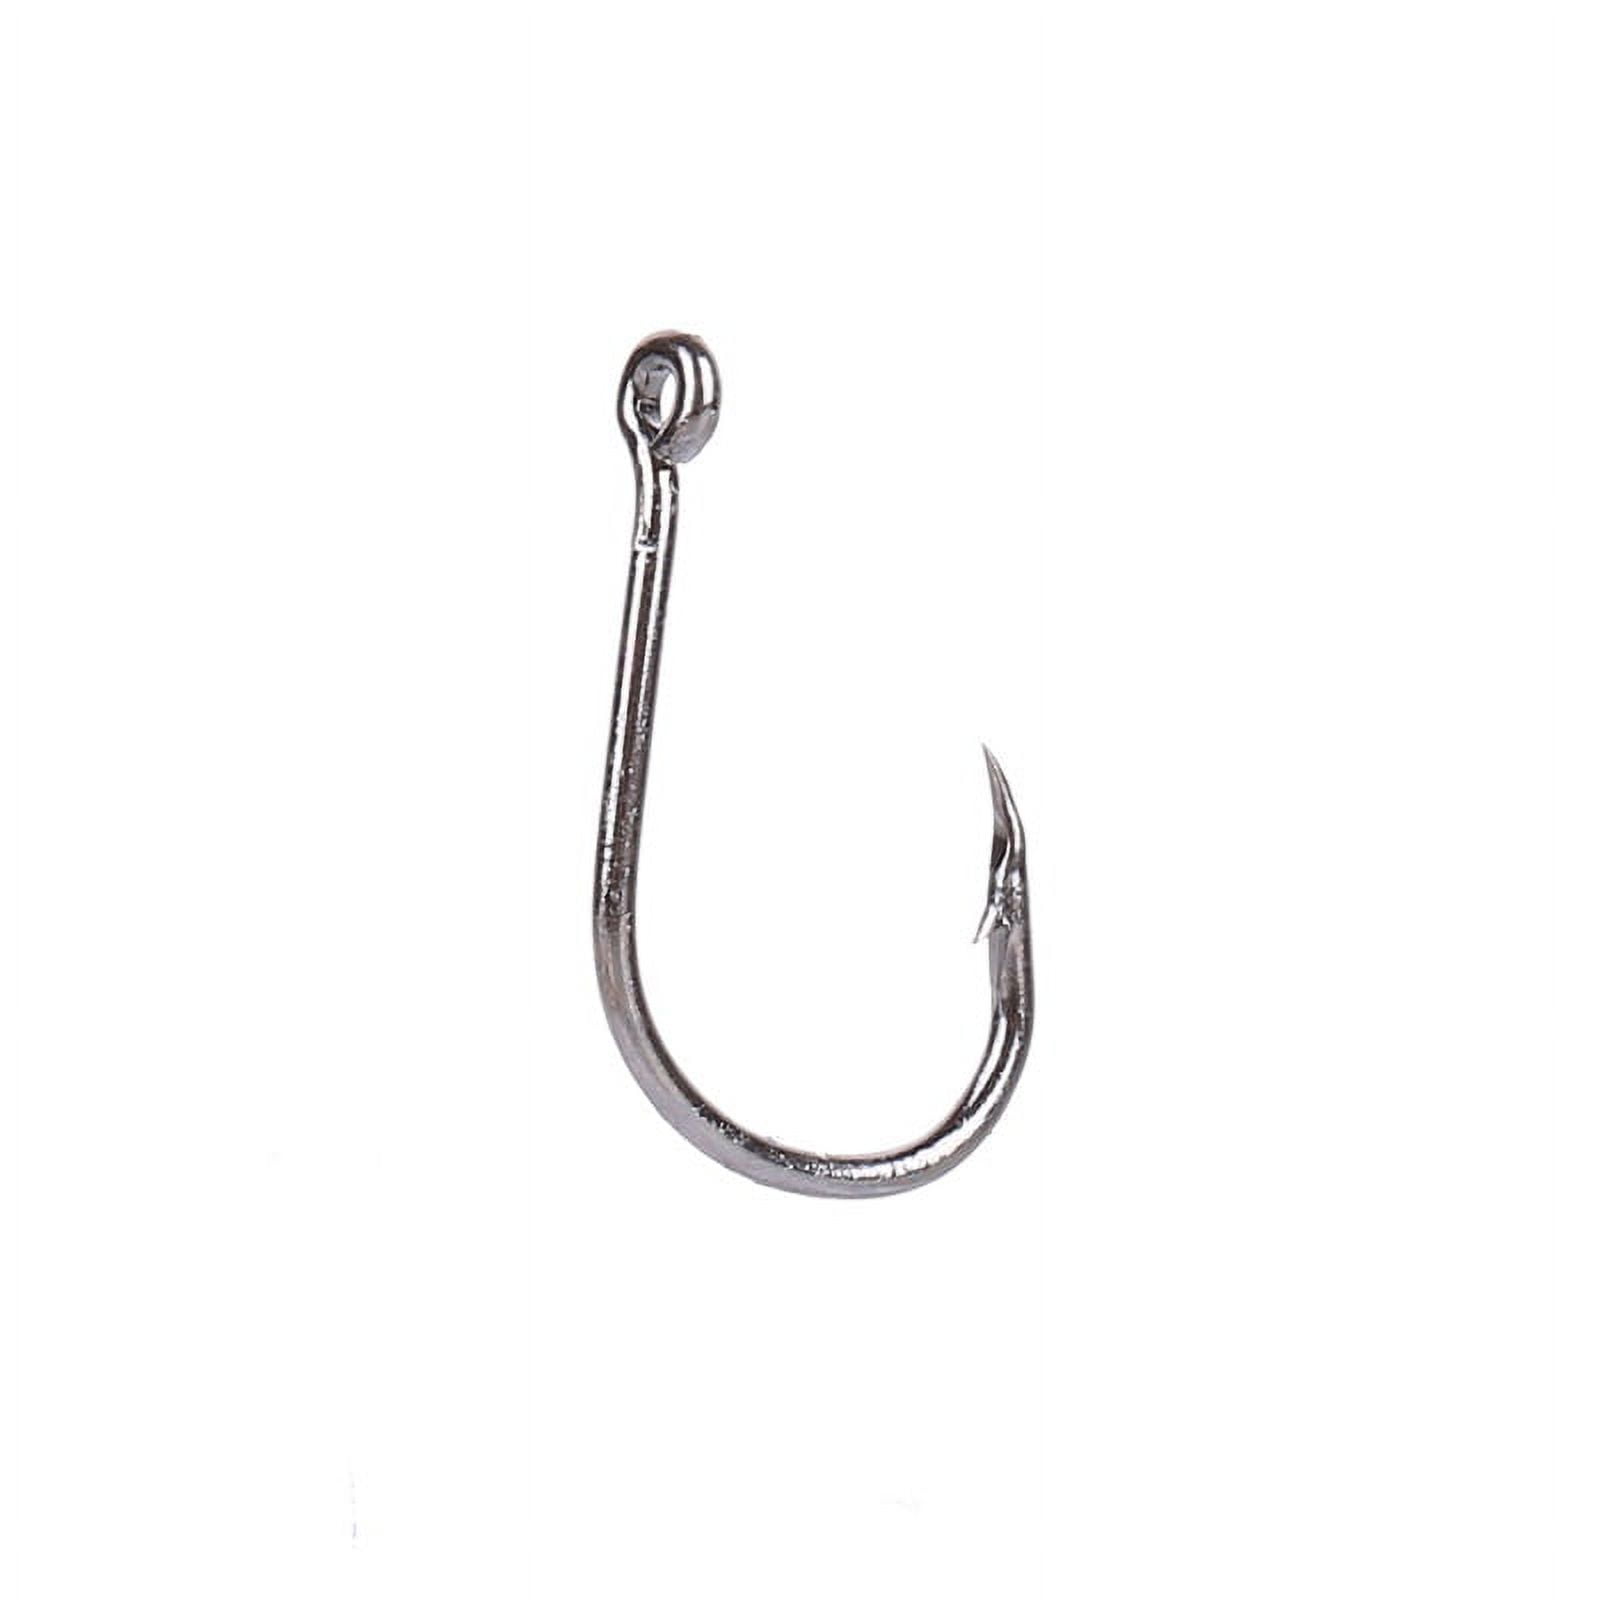 100pcs High Carbon Steel Fishing Hooks Holder Fish Bait Hook, Size: 4